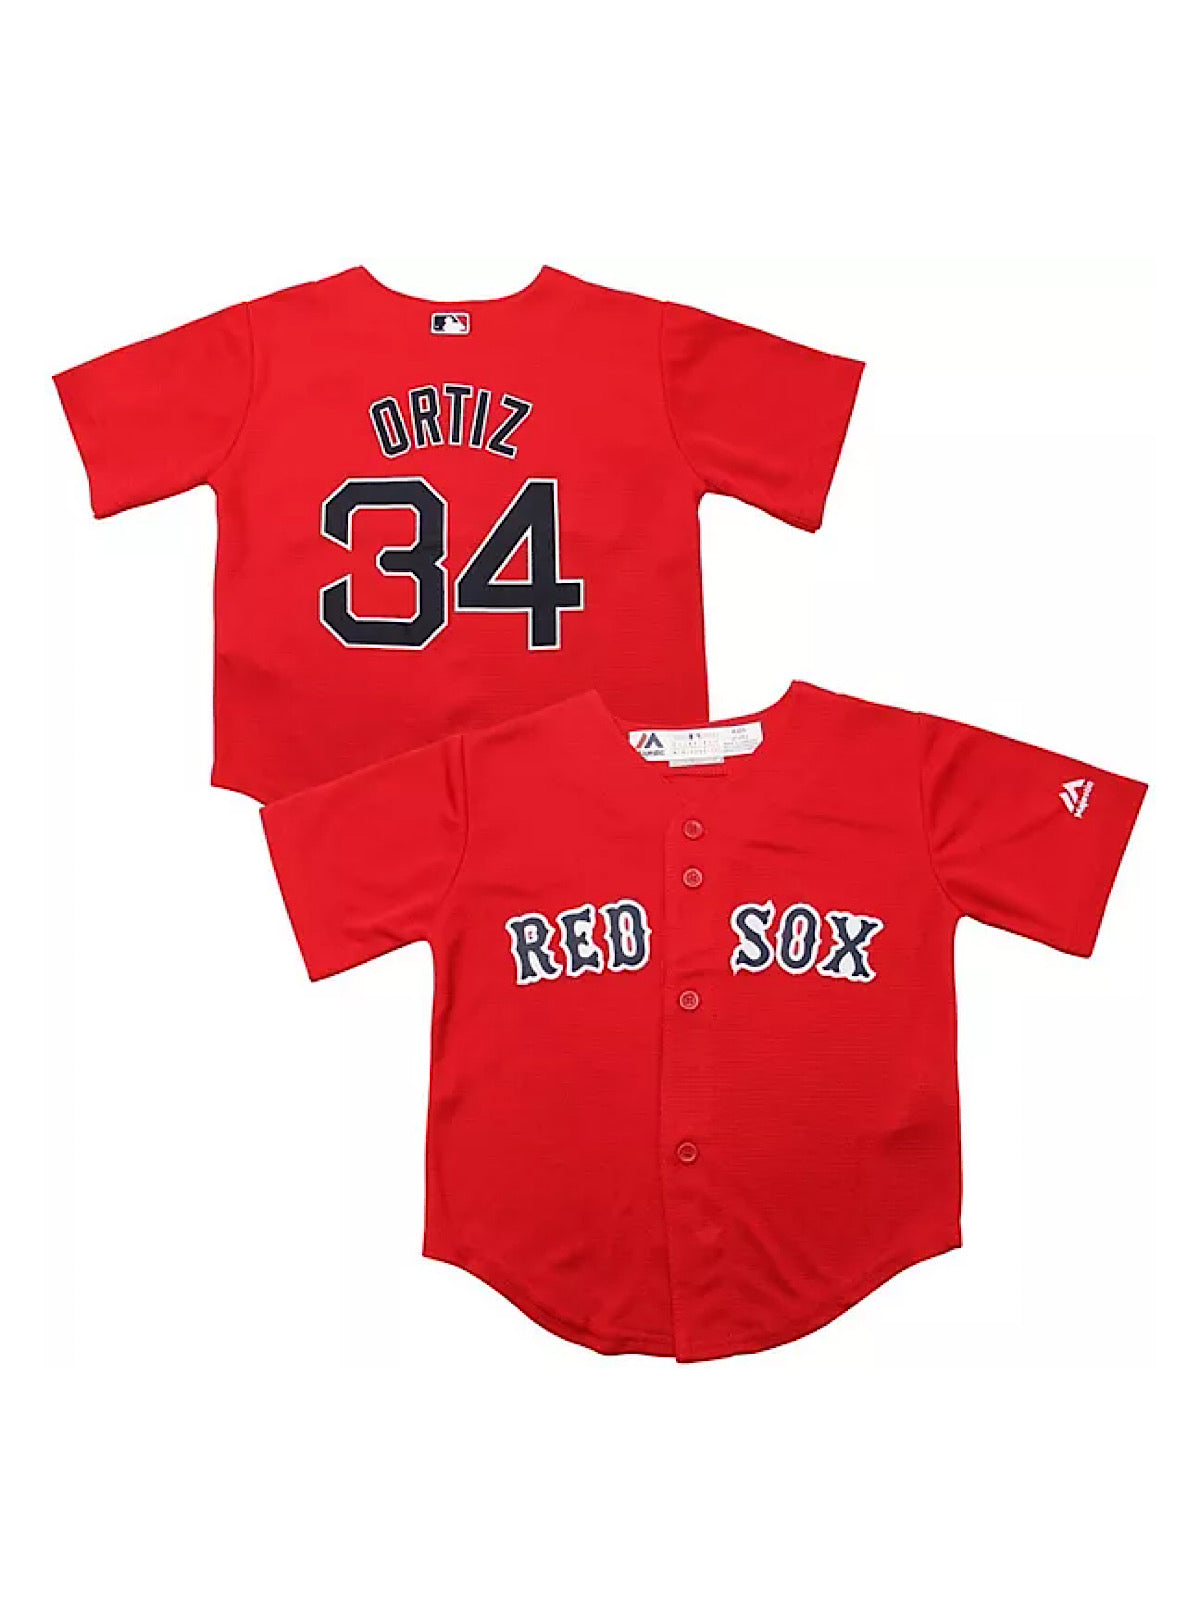 Kids Mitchell & Ness Jersey - BP MLB Red Sox Ortiz 34 - Red – Vengeance78